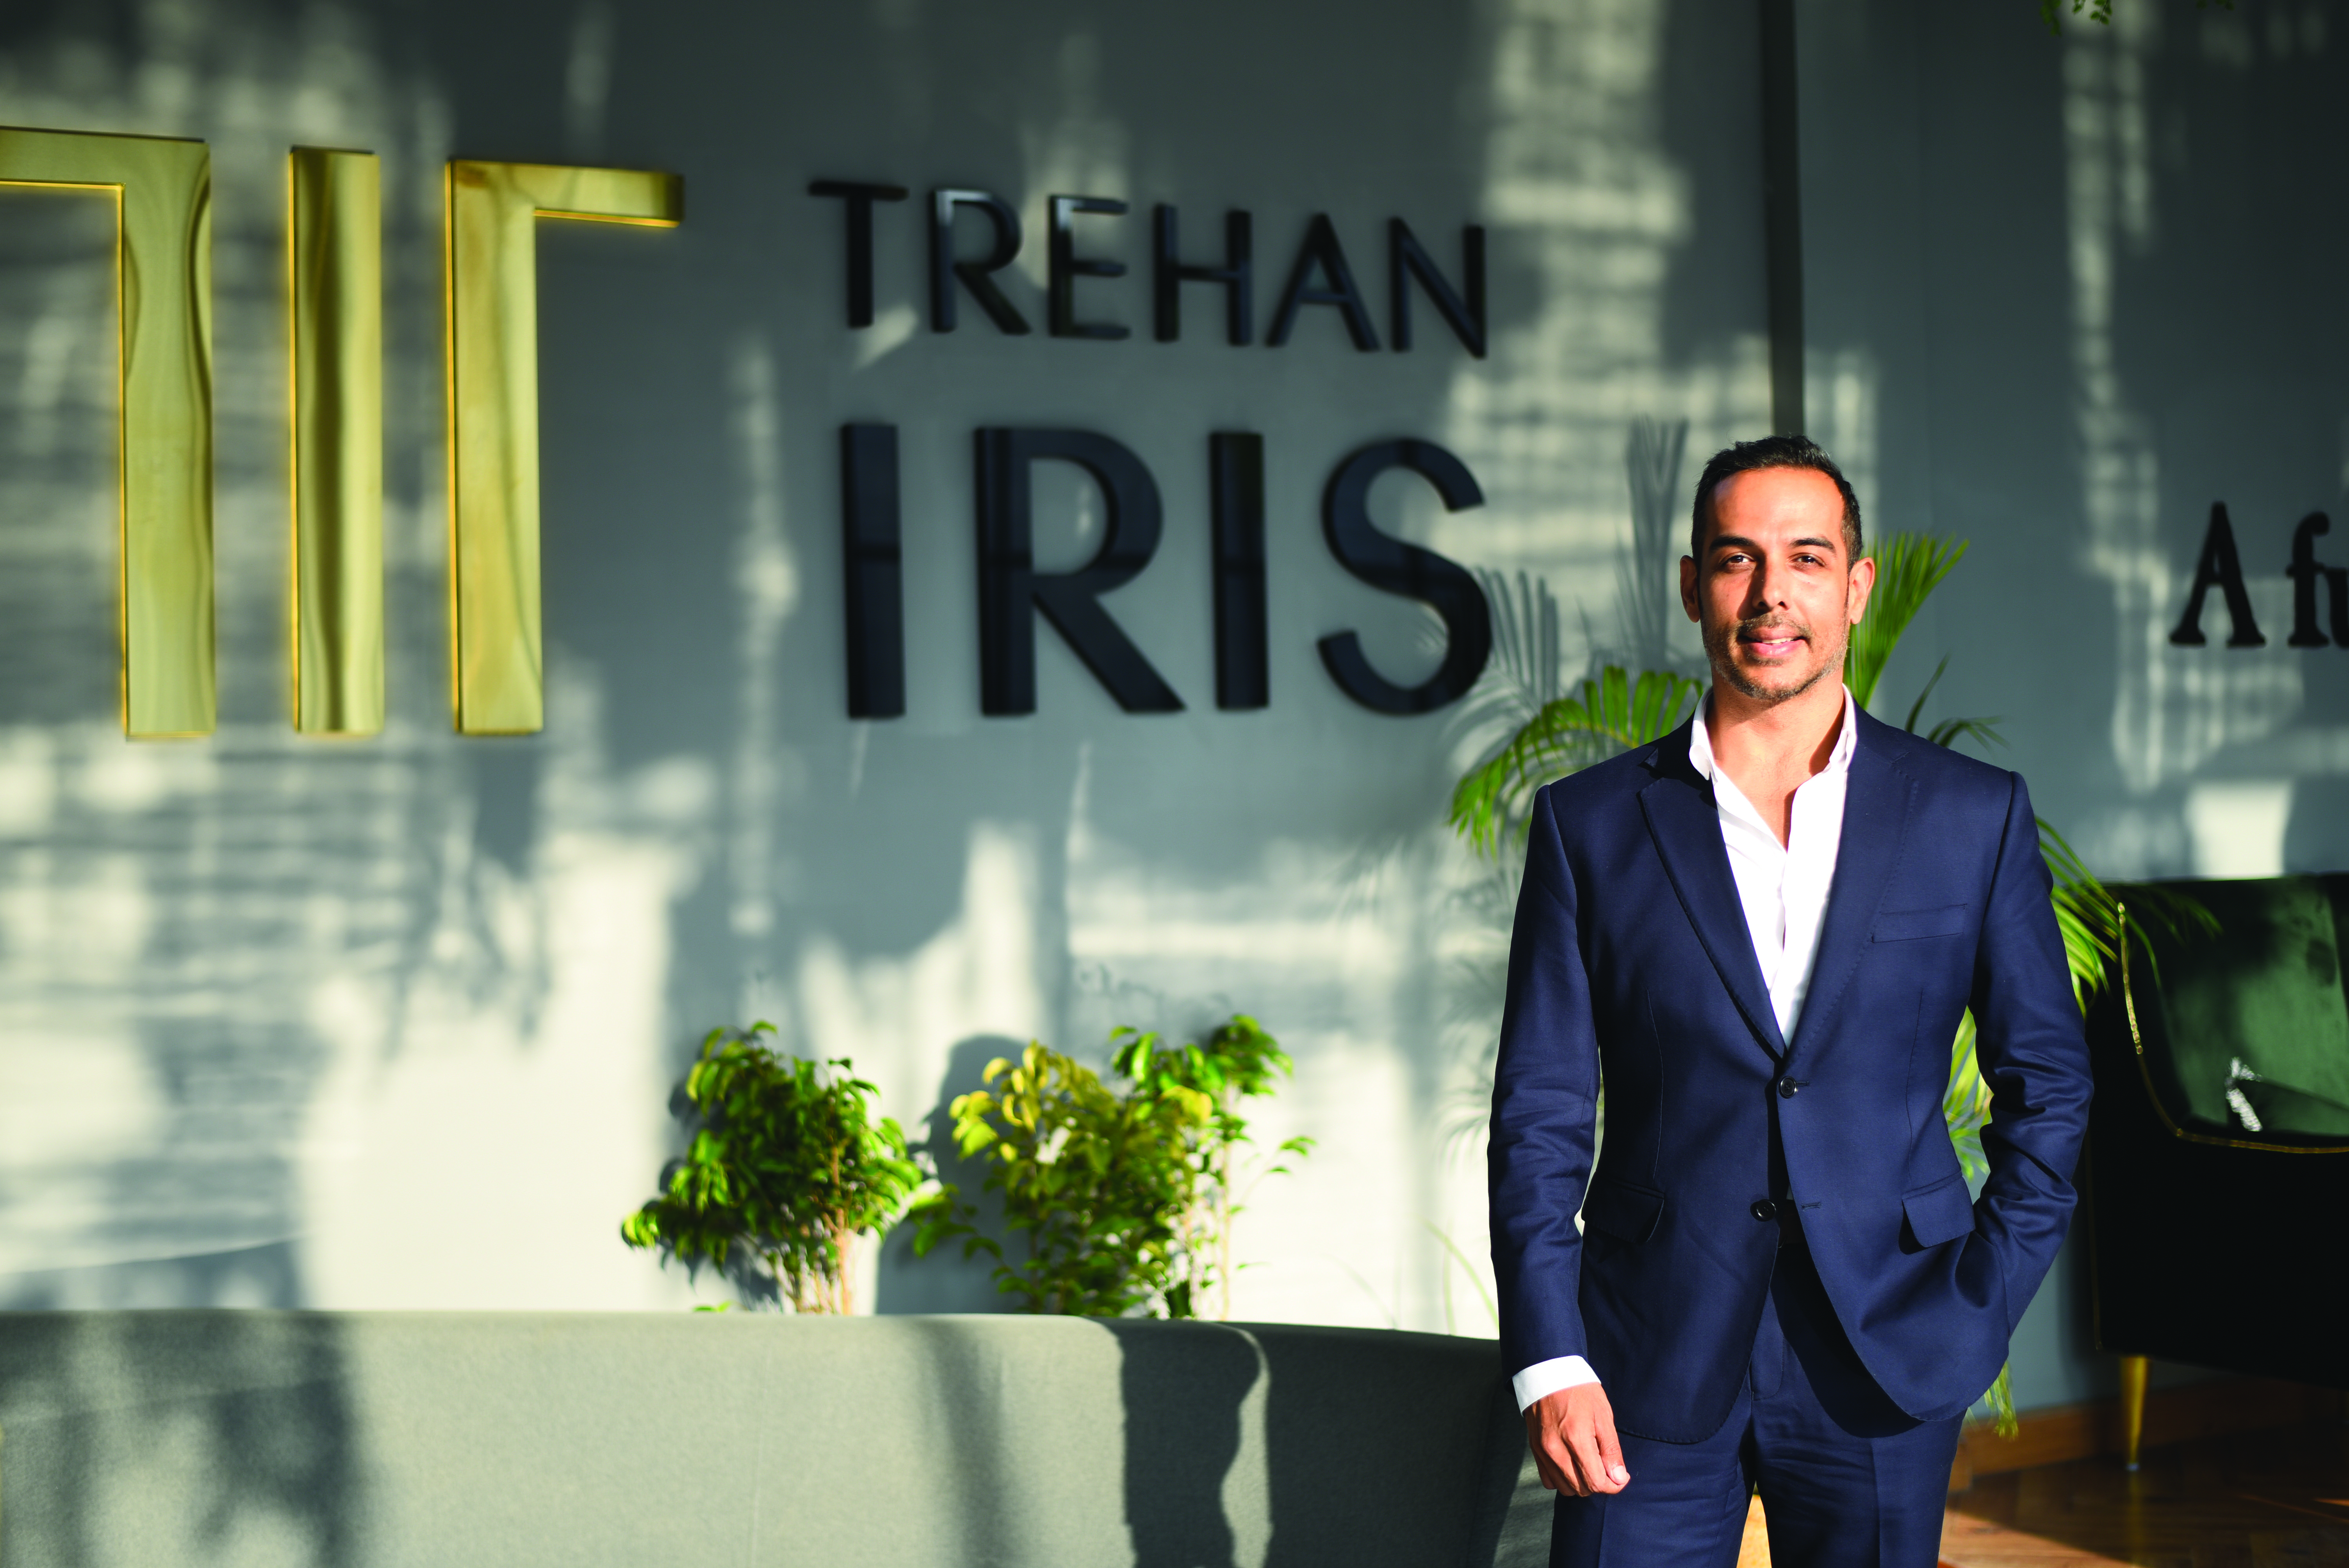 Abhishek Trehan, Executive Director, Trehan Iris